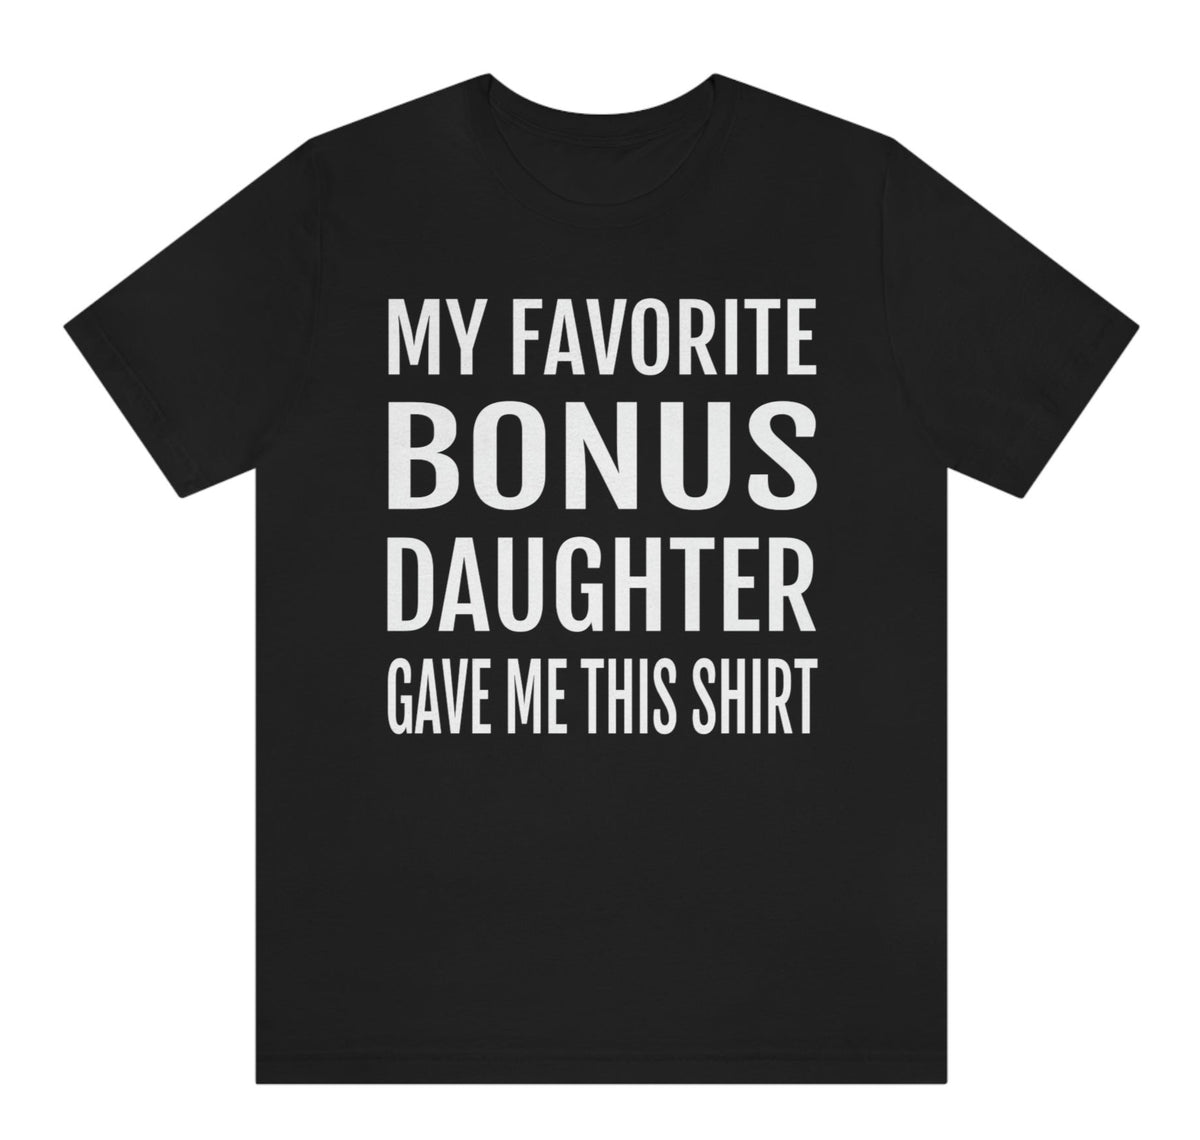 Bonus Dad Shirt - My Favorite Bonus Daughter Gave Me This Shirt